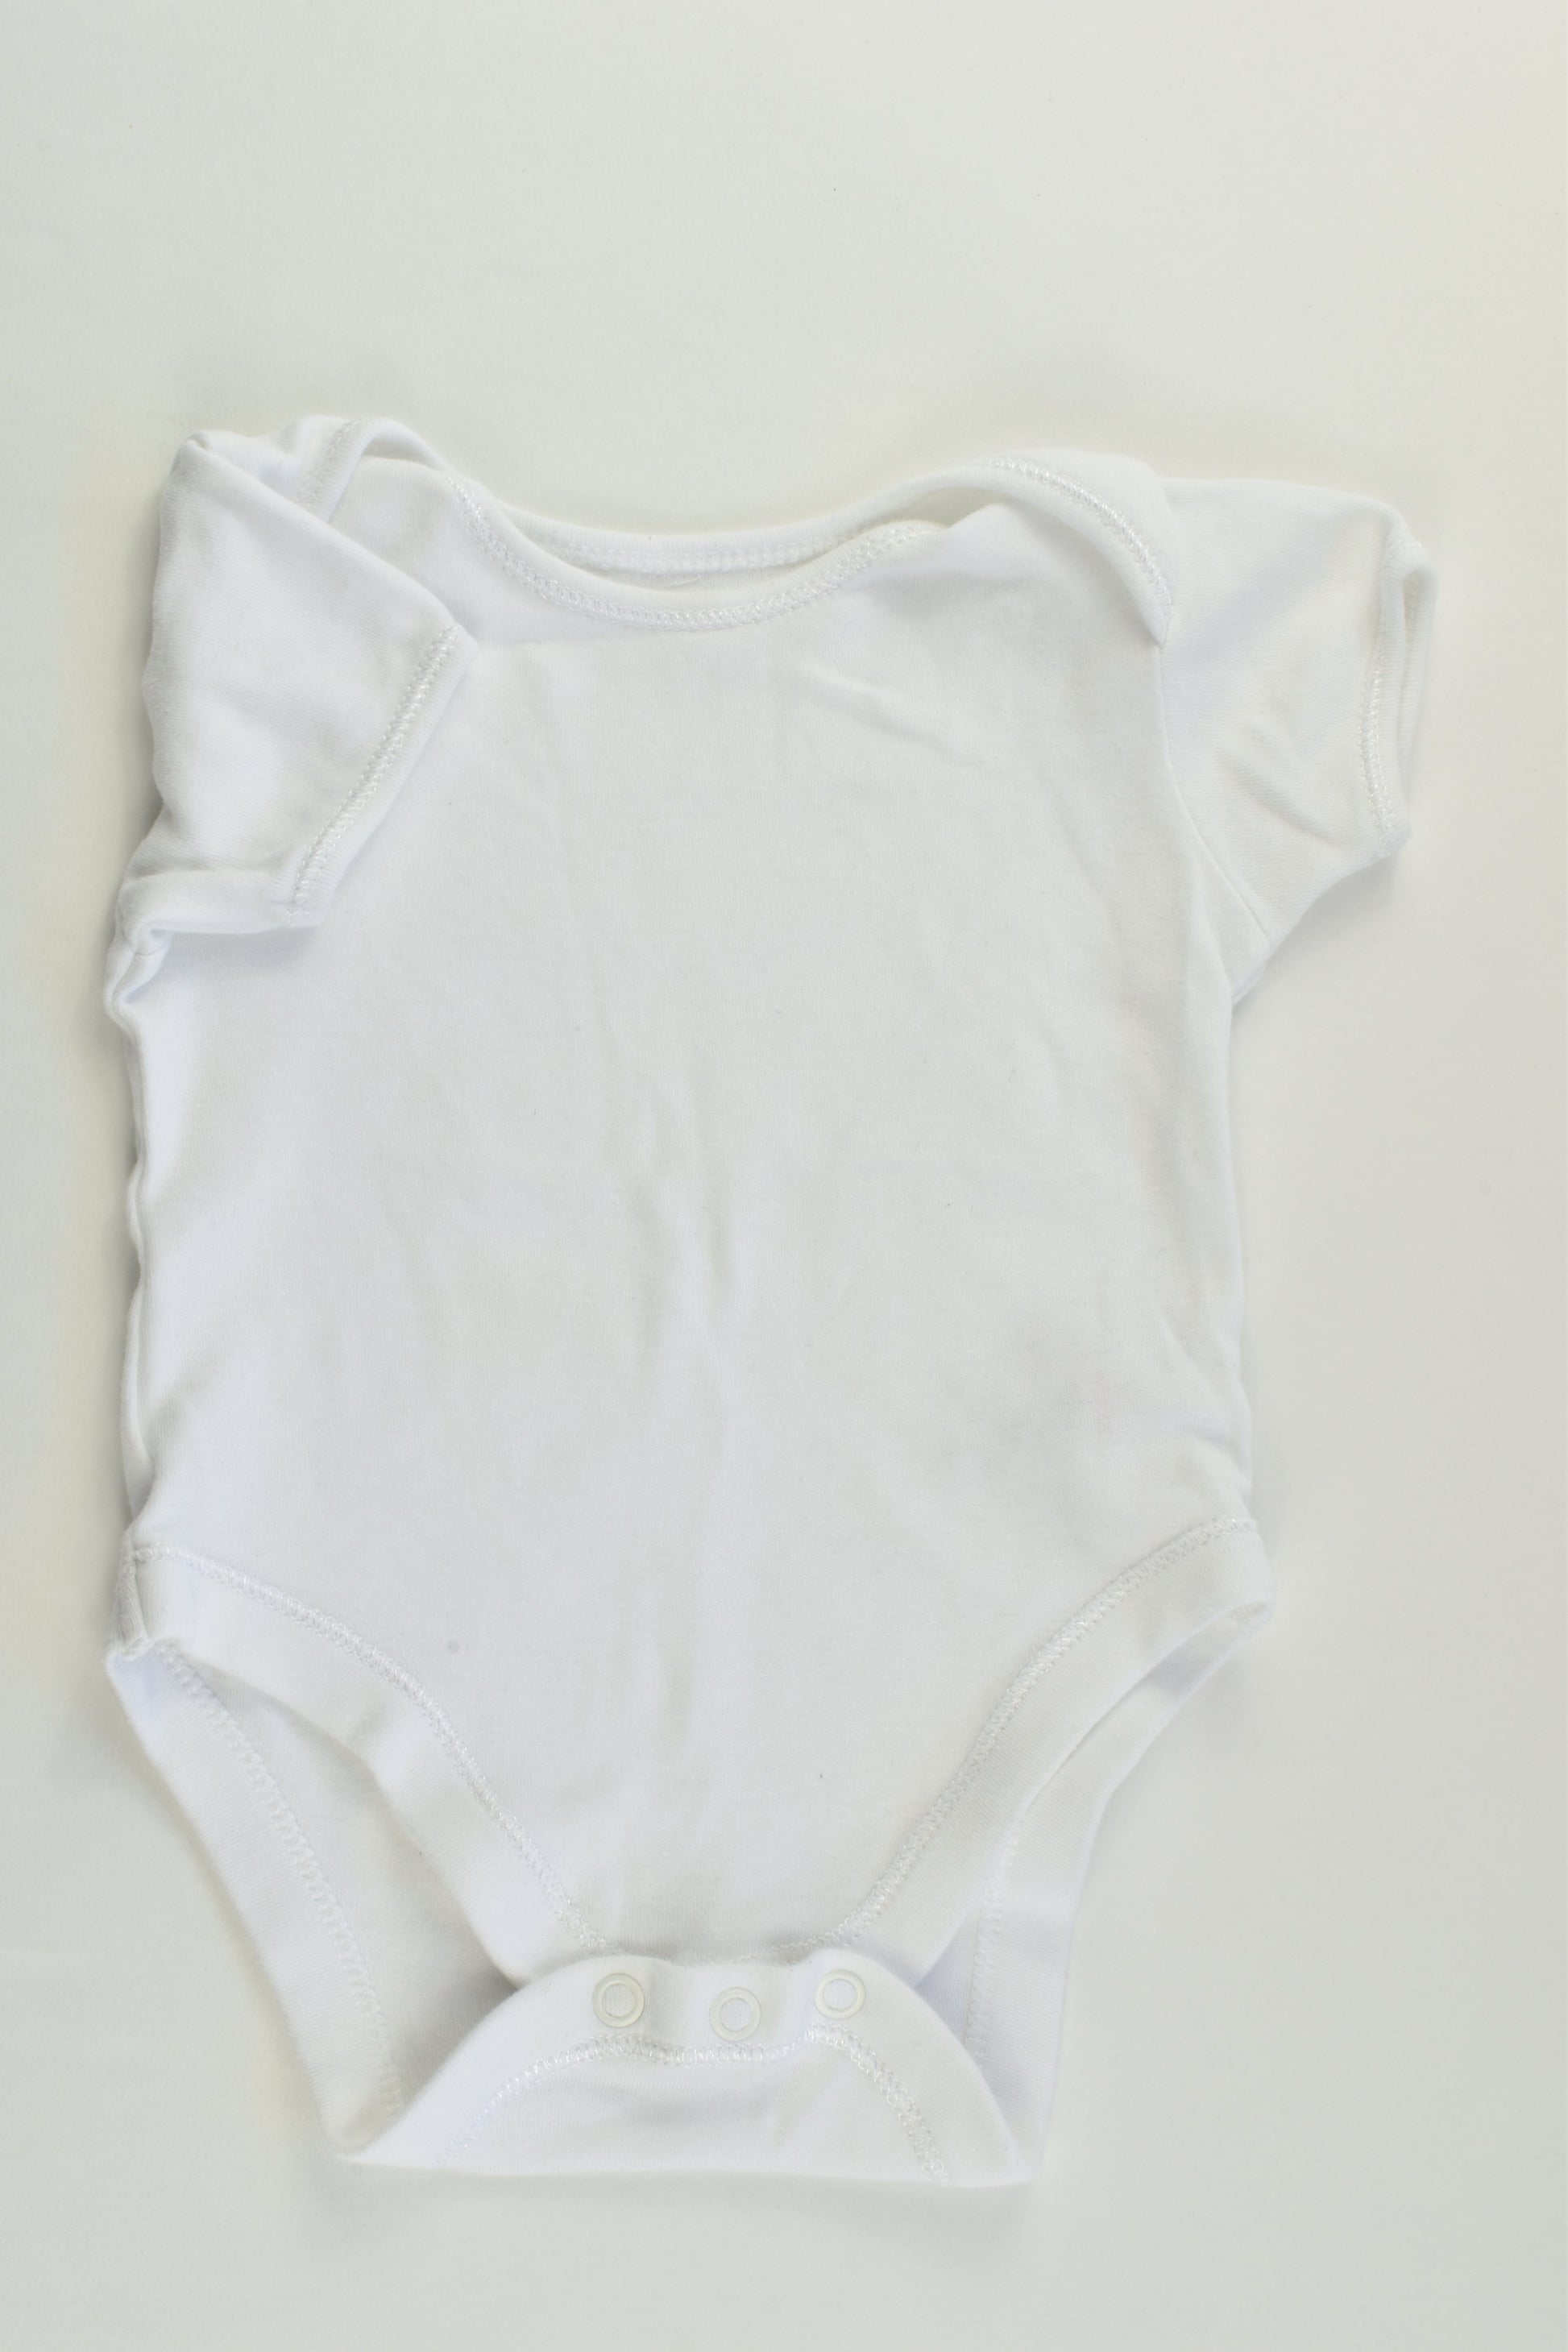 George Size 00 (3-6 months) White Bodysuit